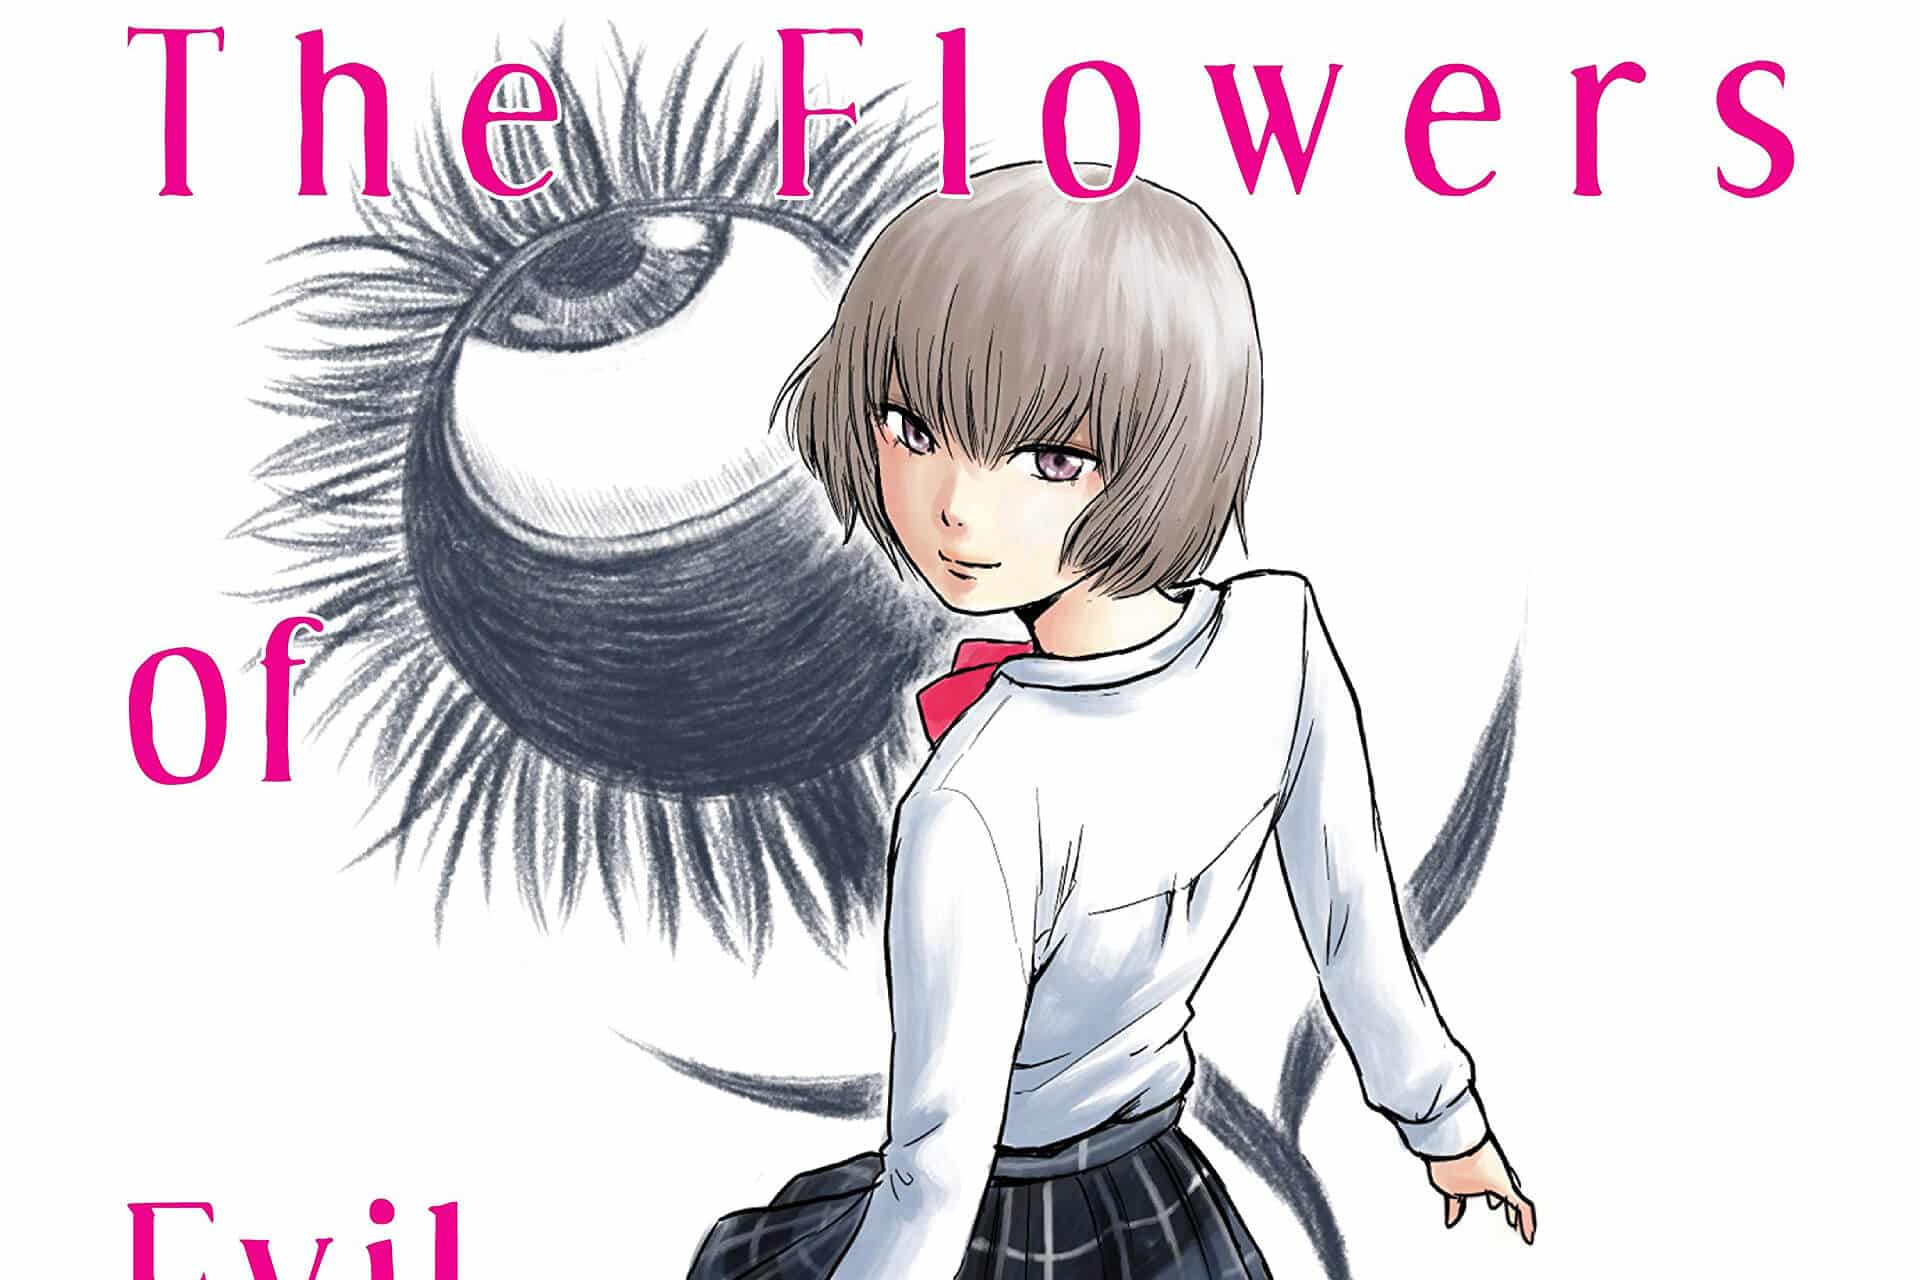 Best Romance Manga - The Flowers of Evil by Shuzo Oshimi